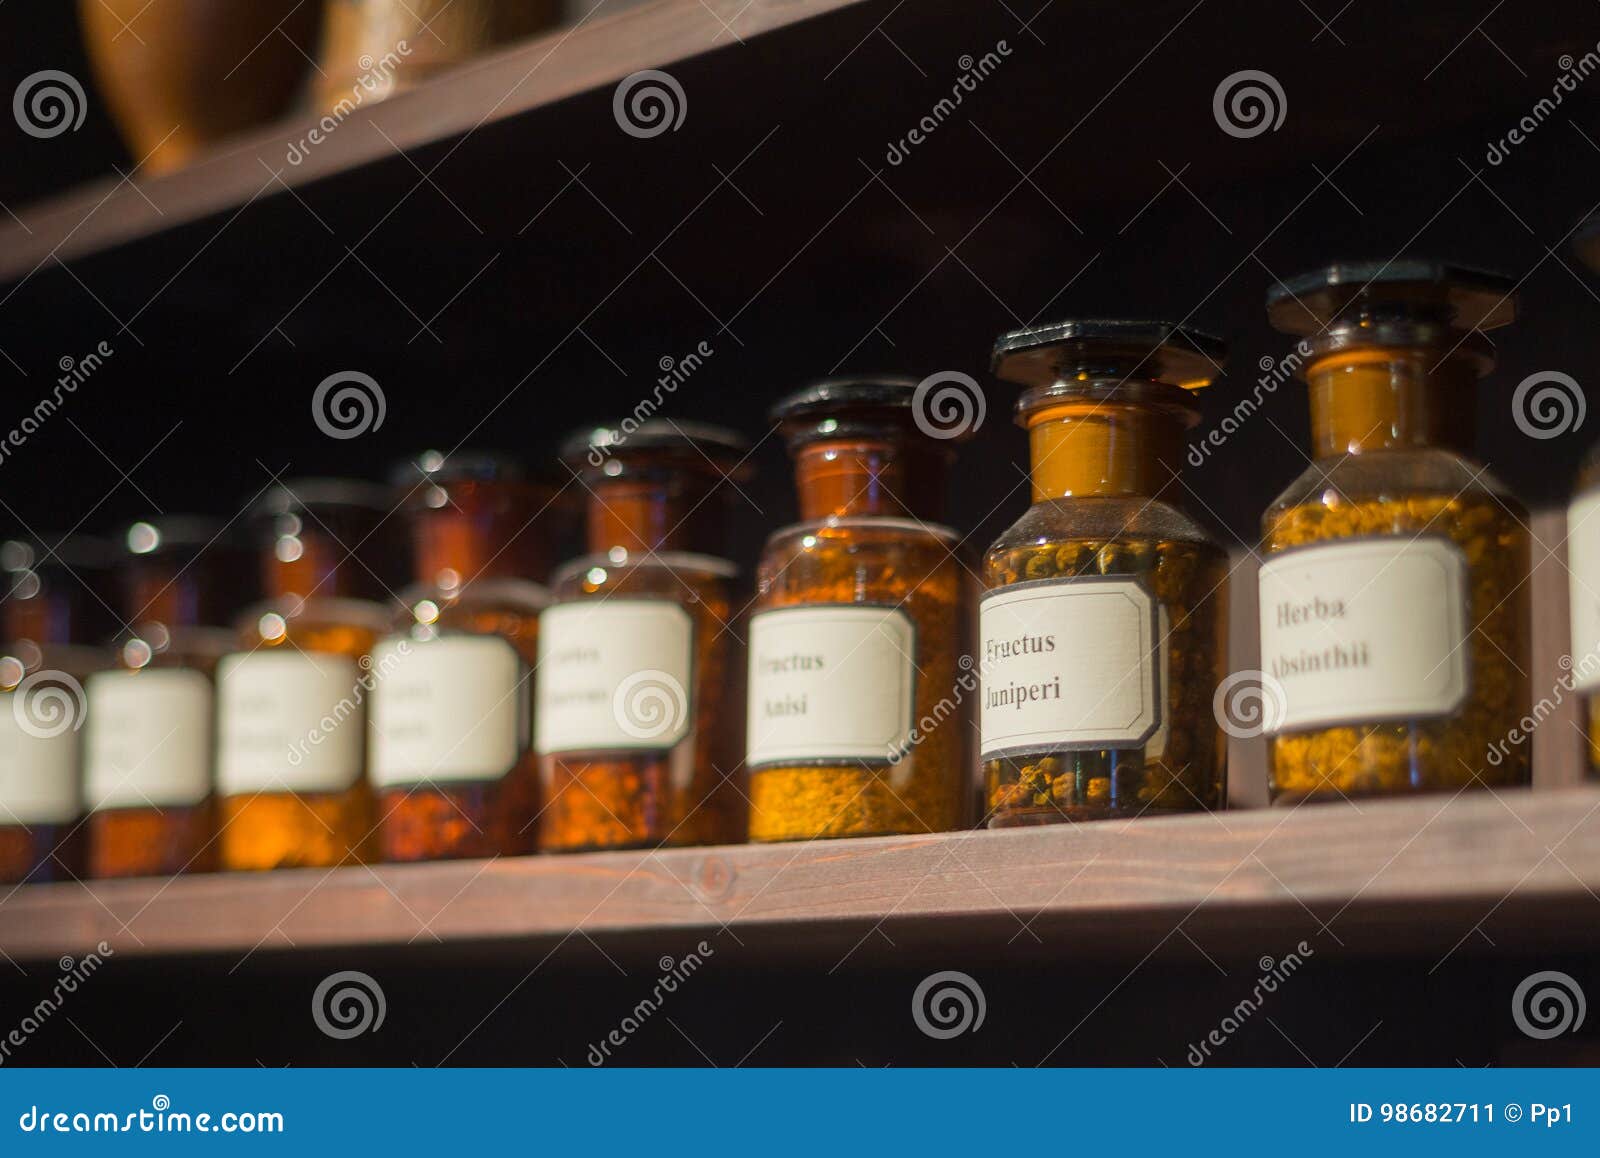 vintage alchemy chemistry workshop rack shelf glass vials